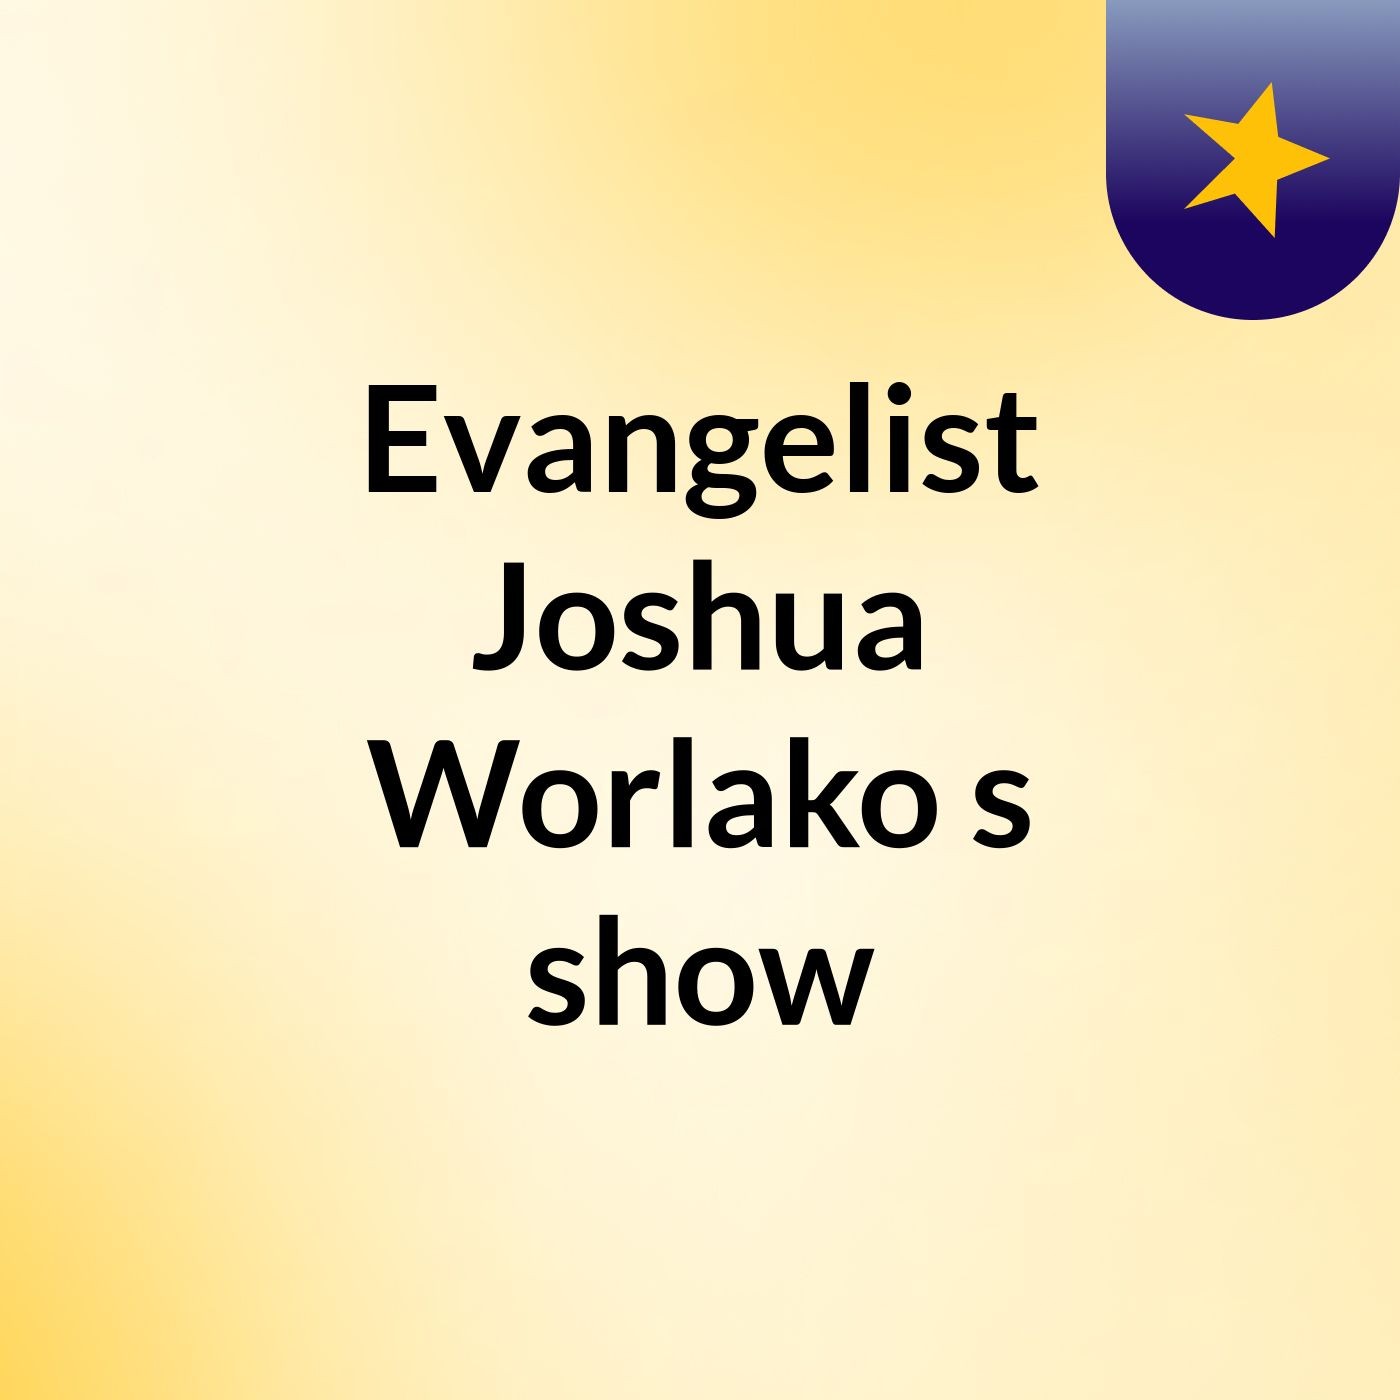 Evangelist Joshua Worlako's show